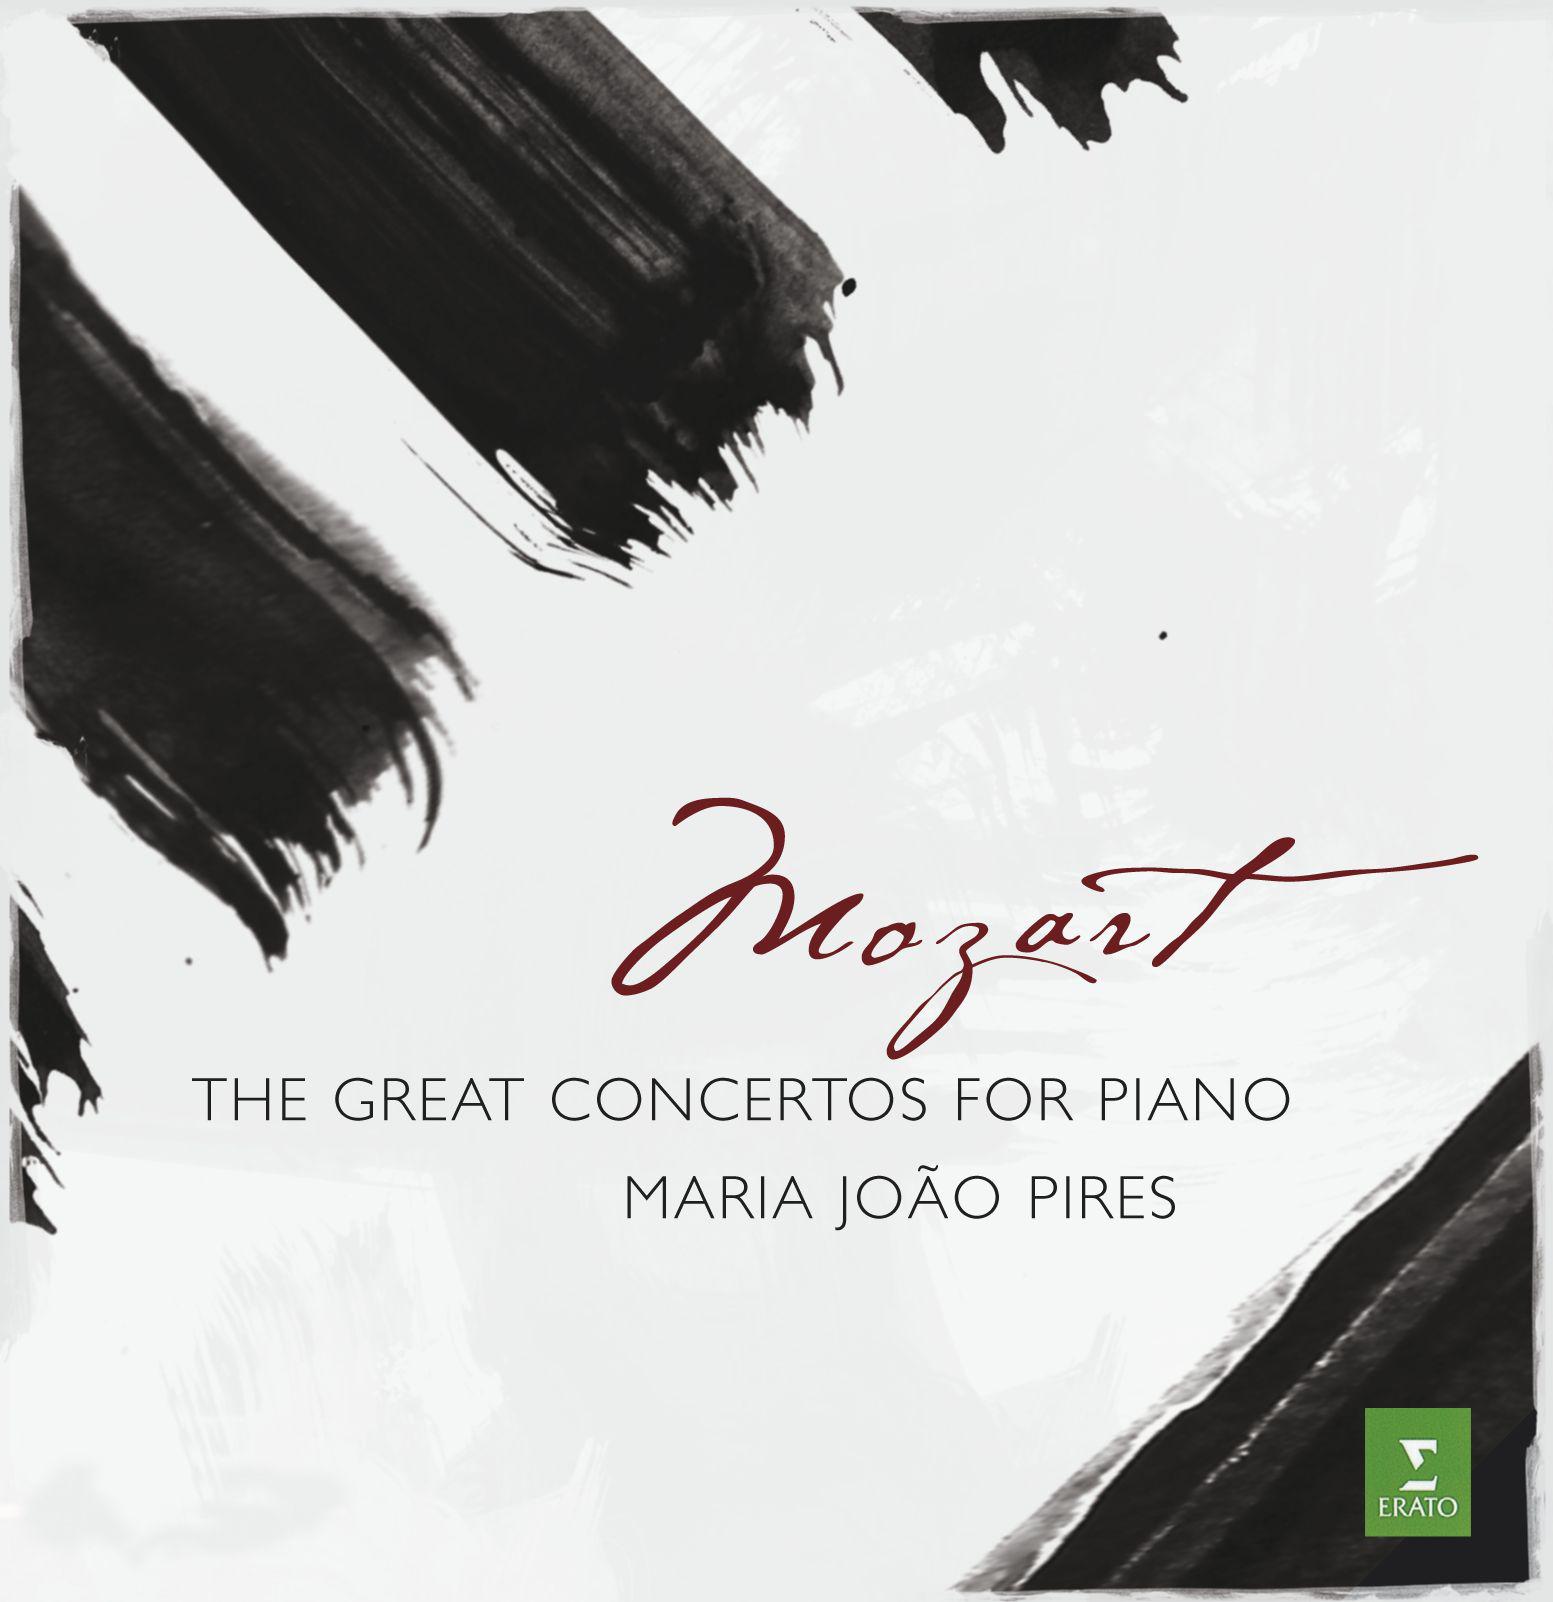 Piano Concerto No. 21 in C Major, K. 467:III. Allegro vivace assai